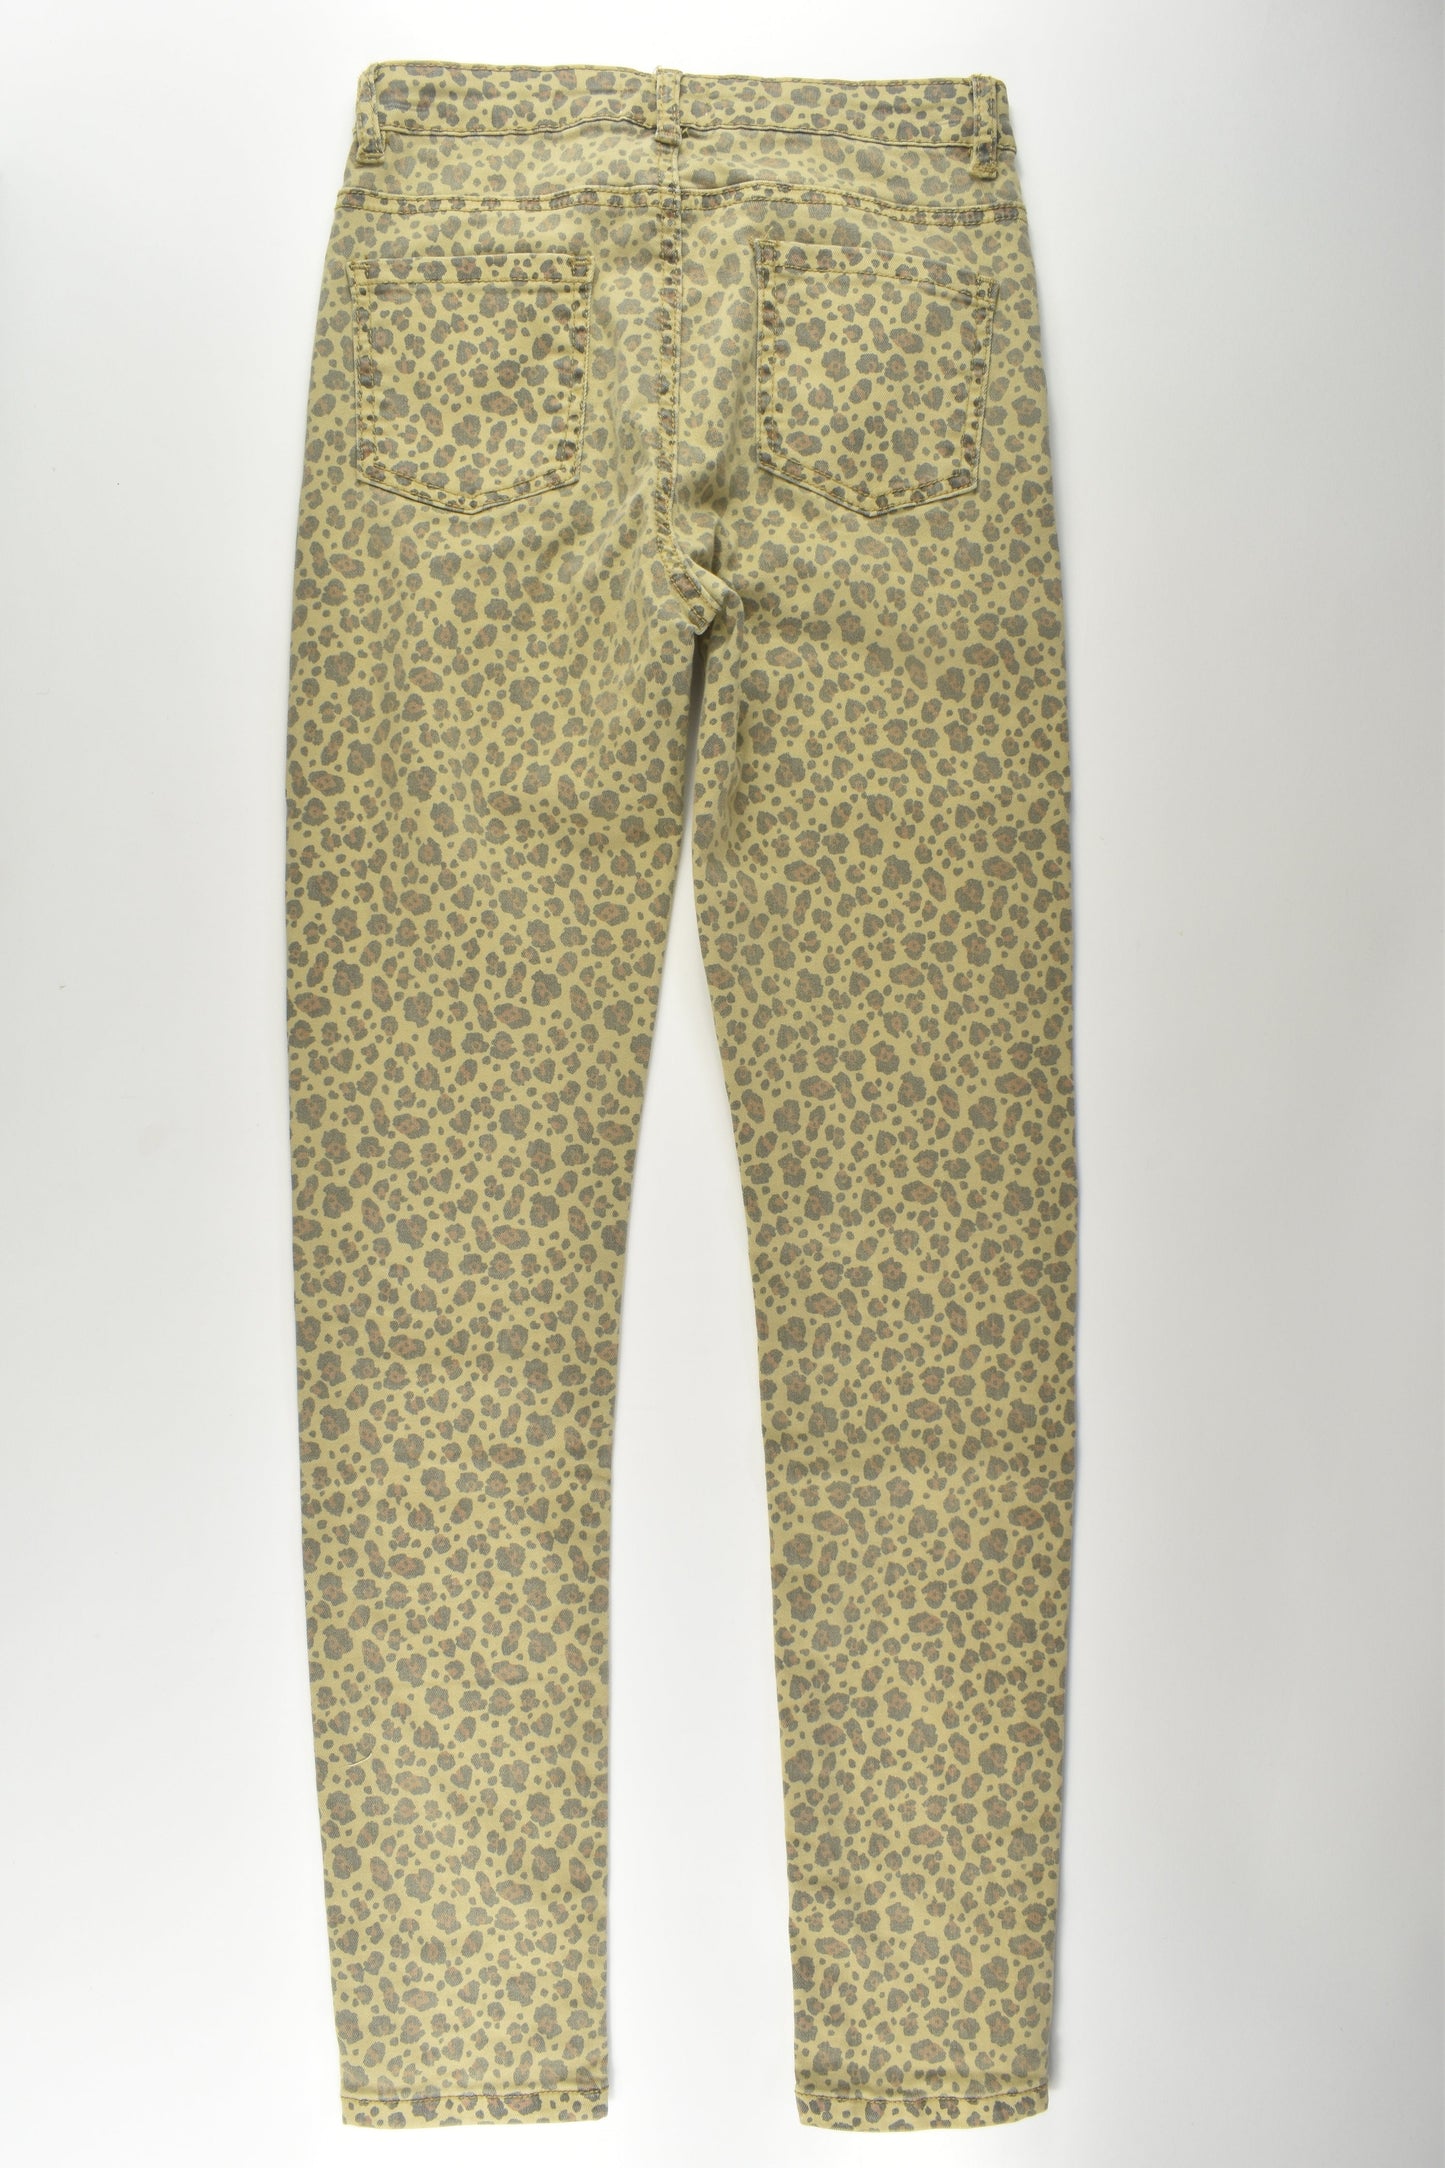 Free for Cotton n Size 14 Leopard Print Pants